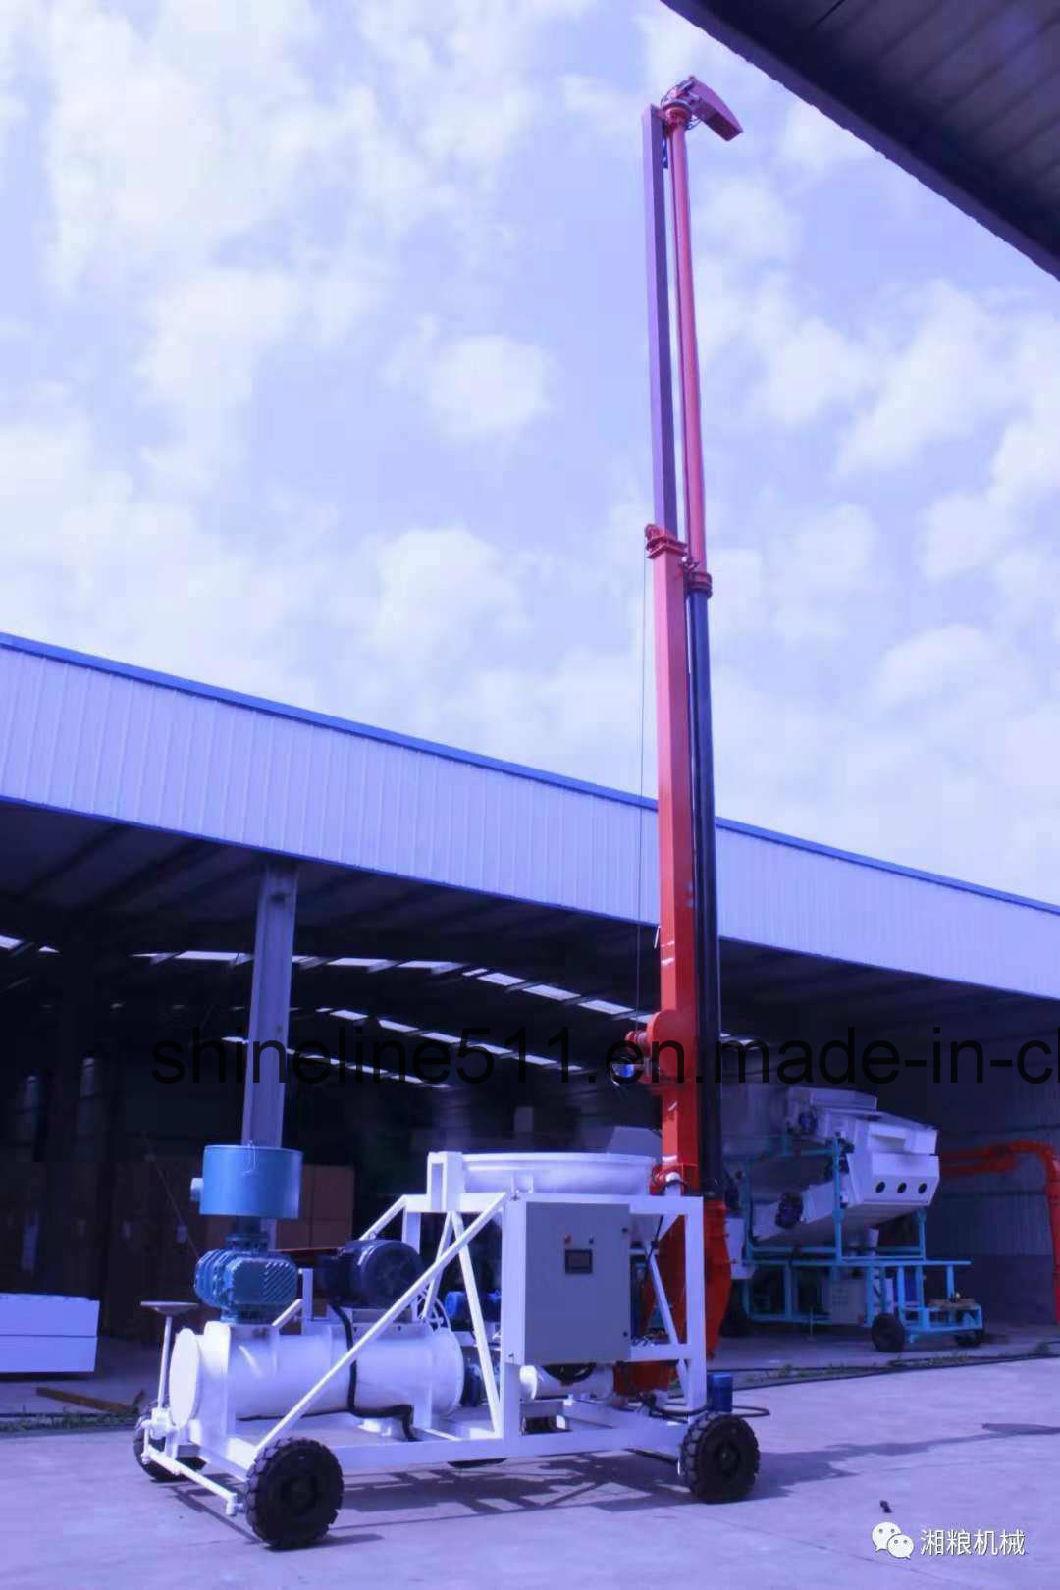 Standard Exportatiion Packing New Xiangliang Brand PVC Conveyor Grain Pump